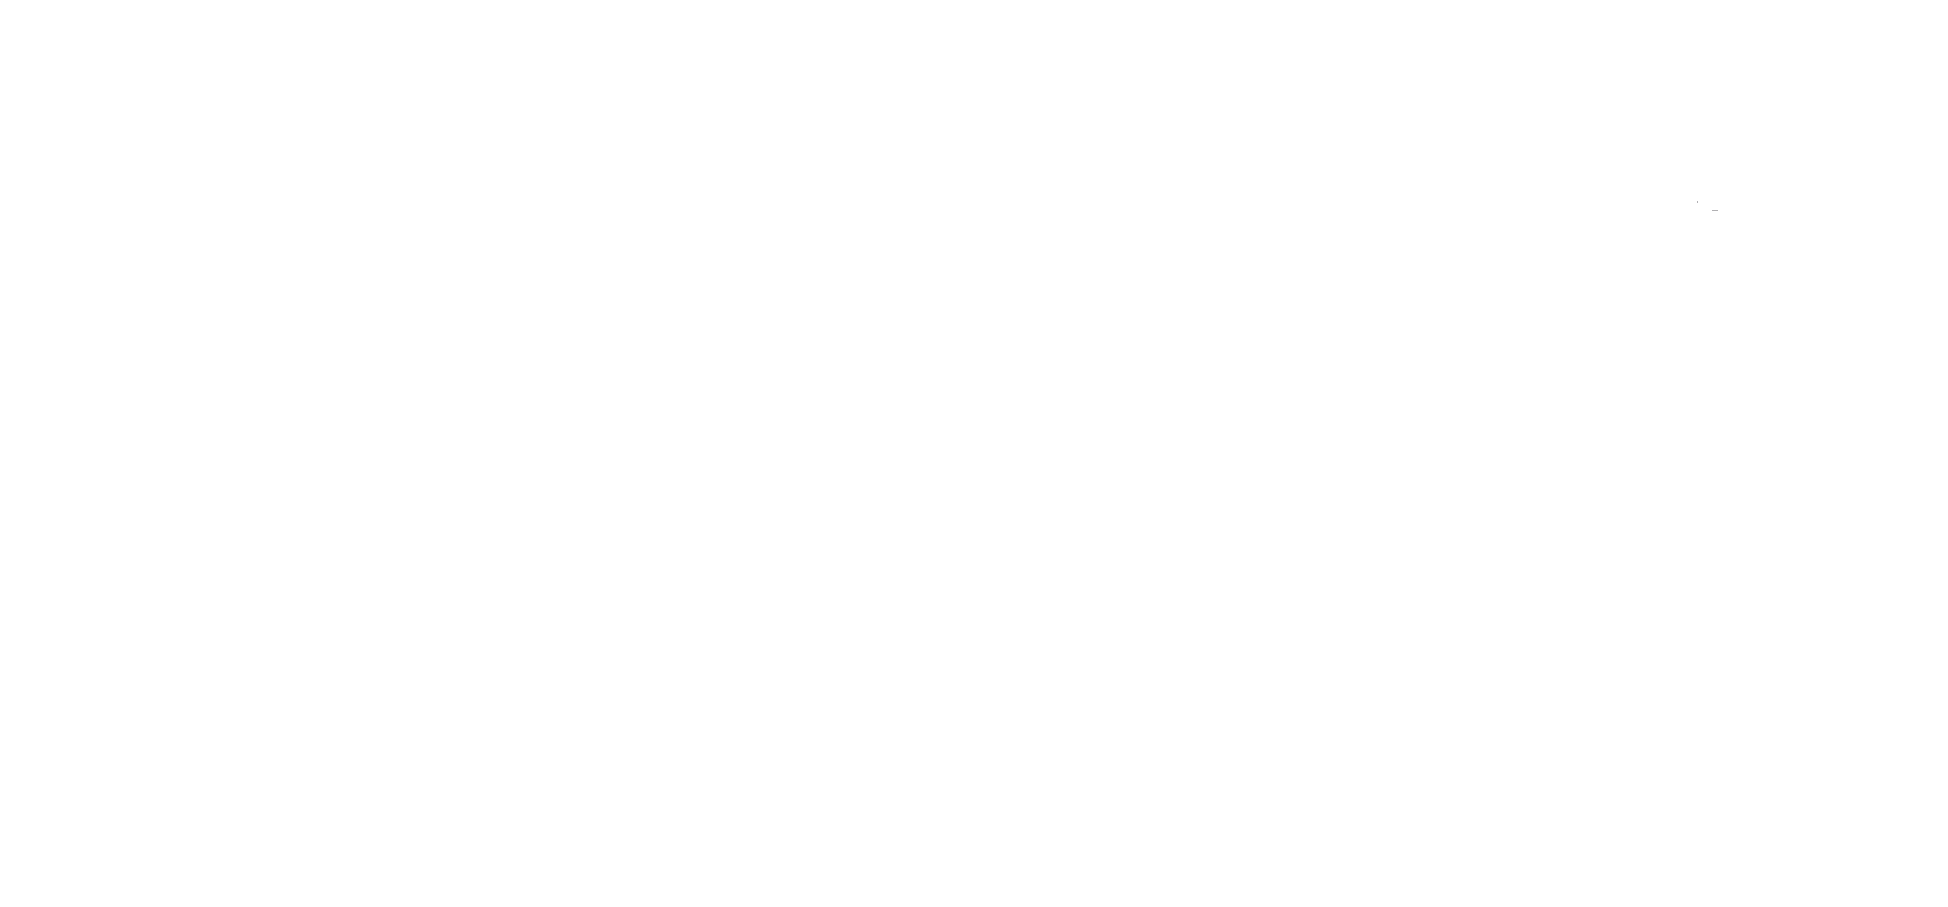 Trowbridge Bathrooms - No Background